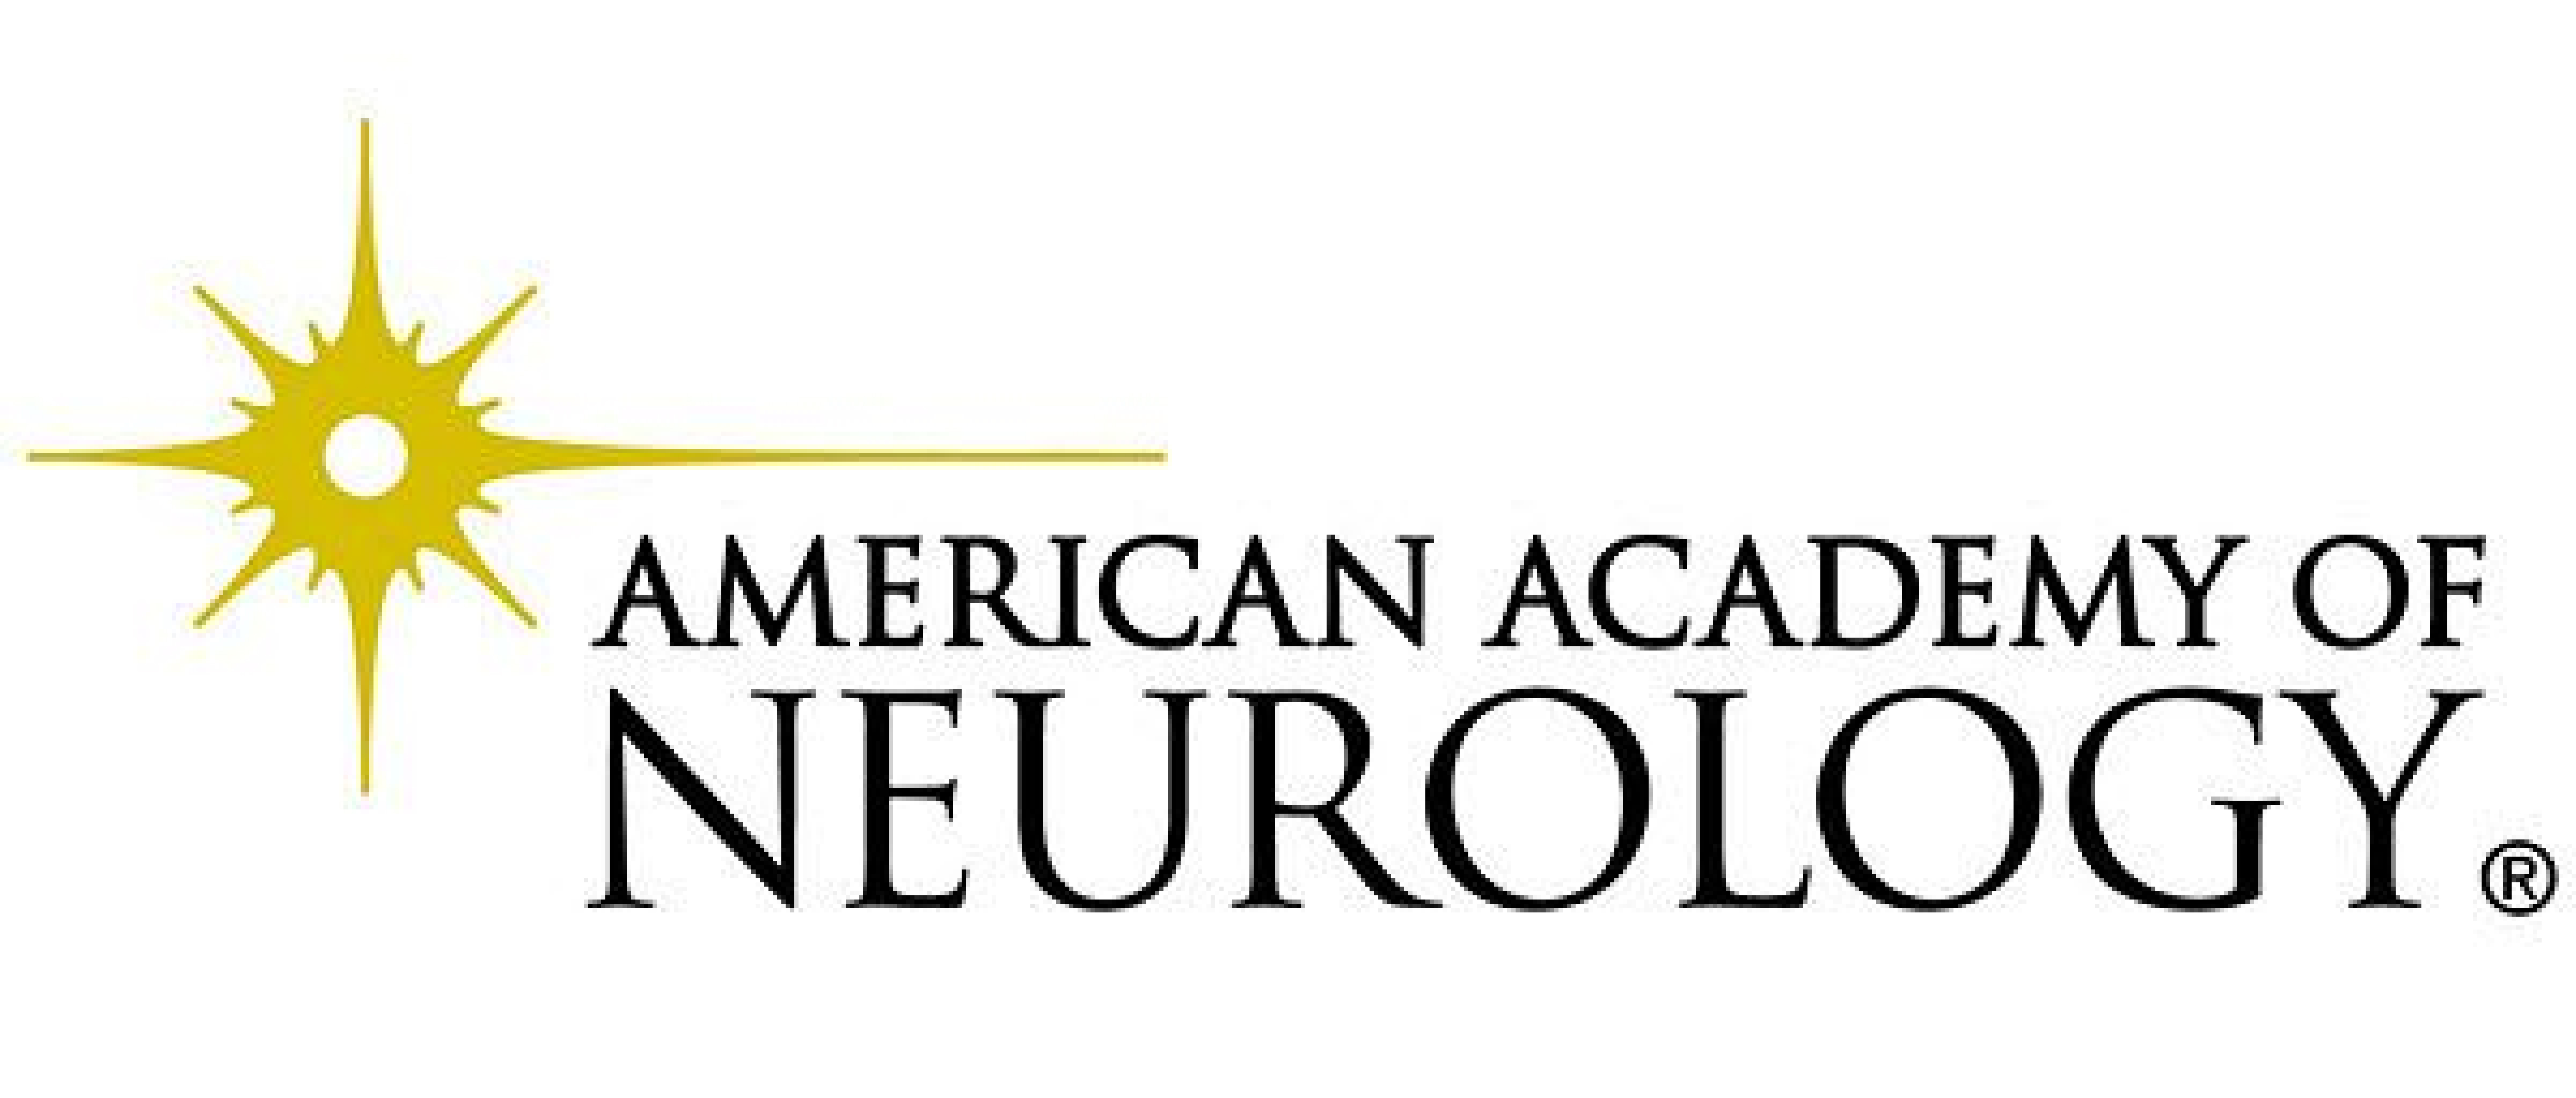 American Academy of Neurology's logo